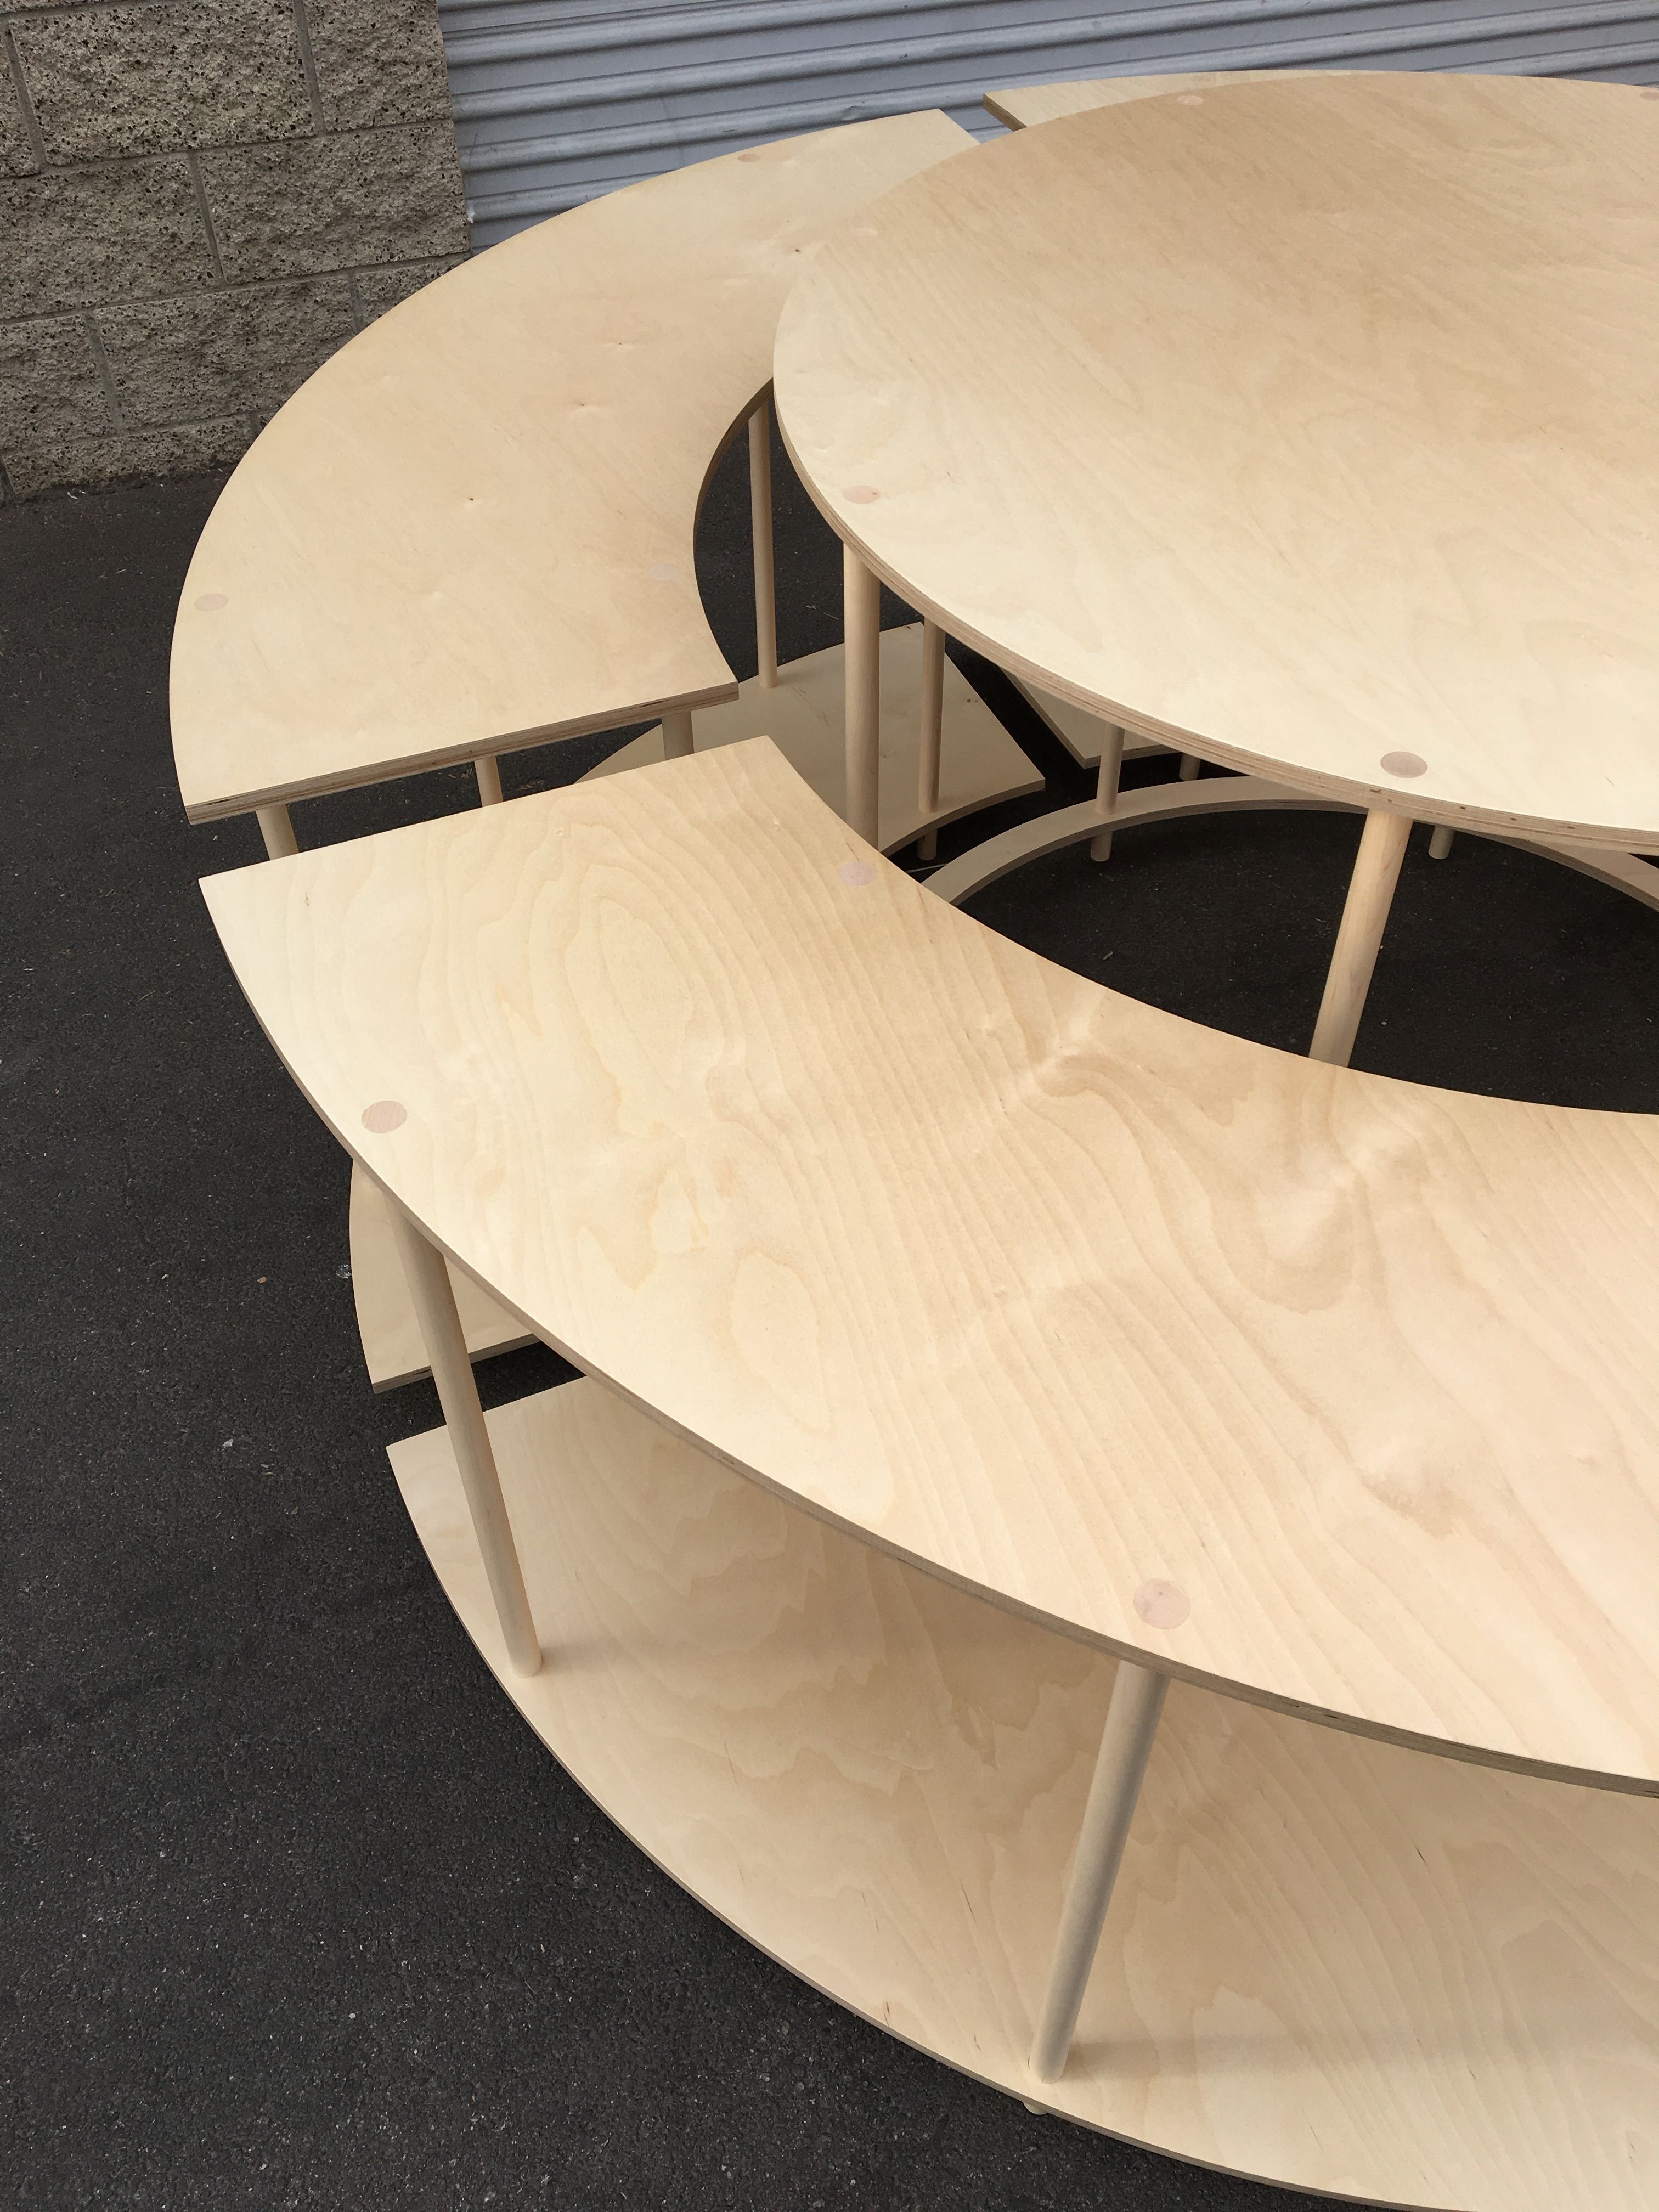  Display Table - Owl Bureau x Adidas / Abbott Kinney Festival product image 6